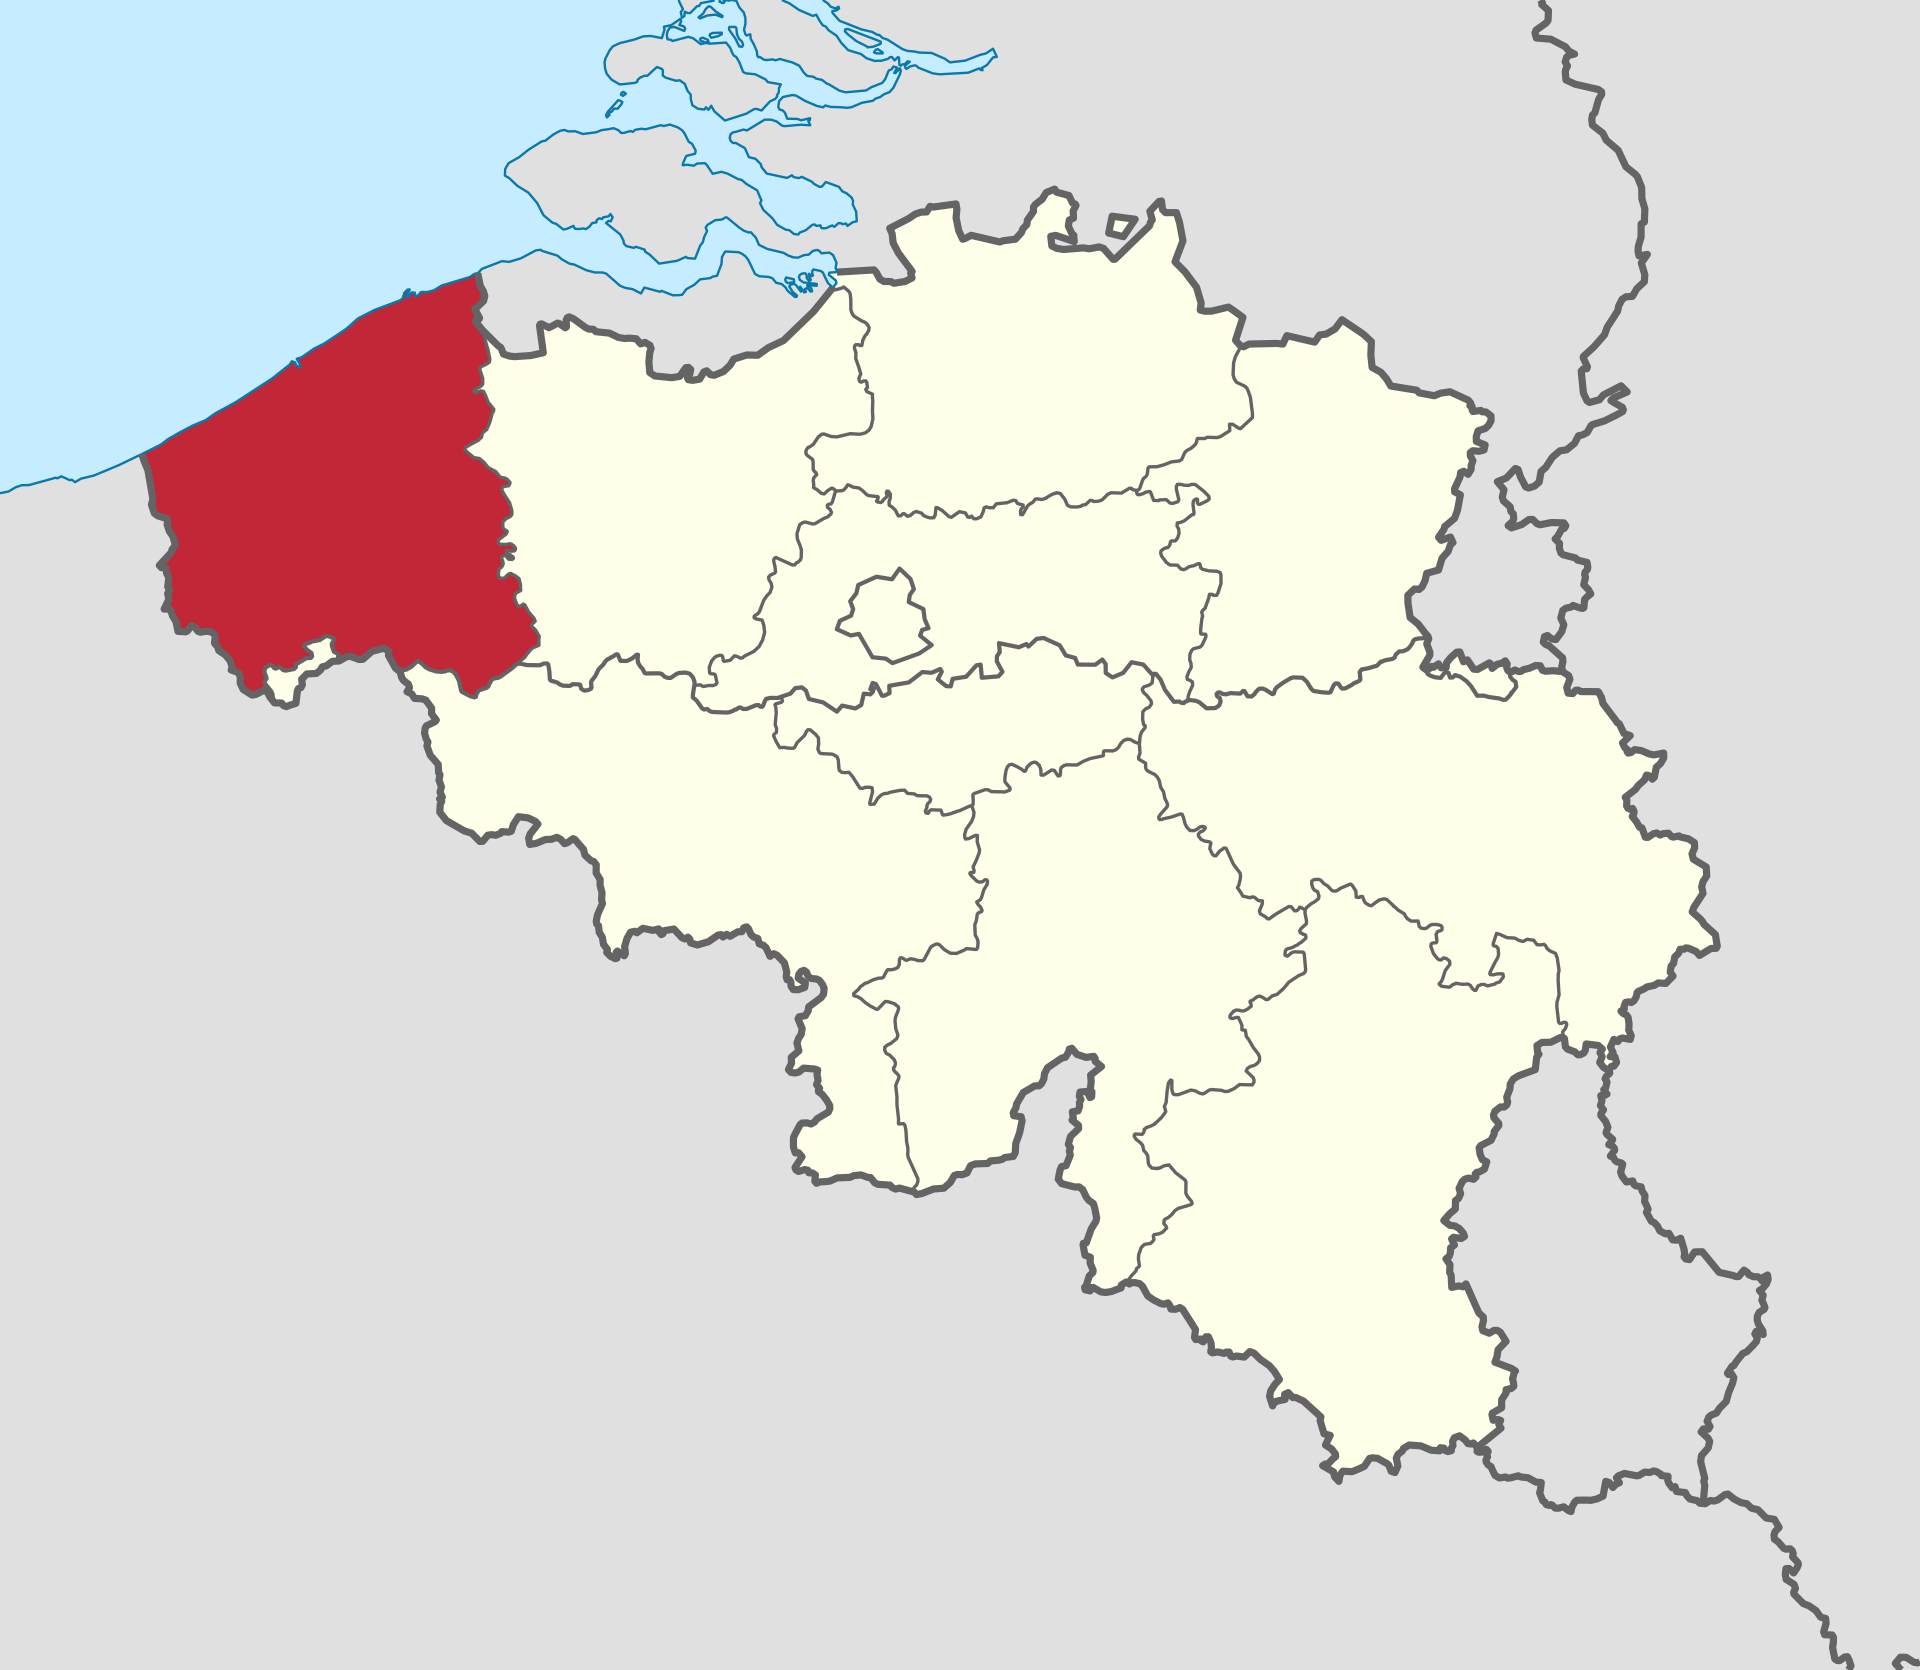 Beuk Villa Urbex location or around the region West-Vlaanderen (Vlaams Gewest), Belgium